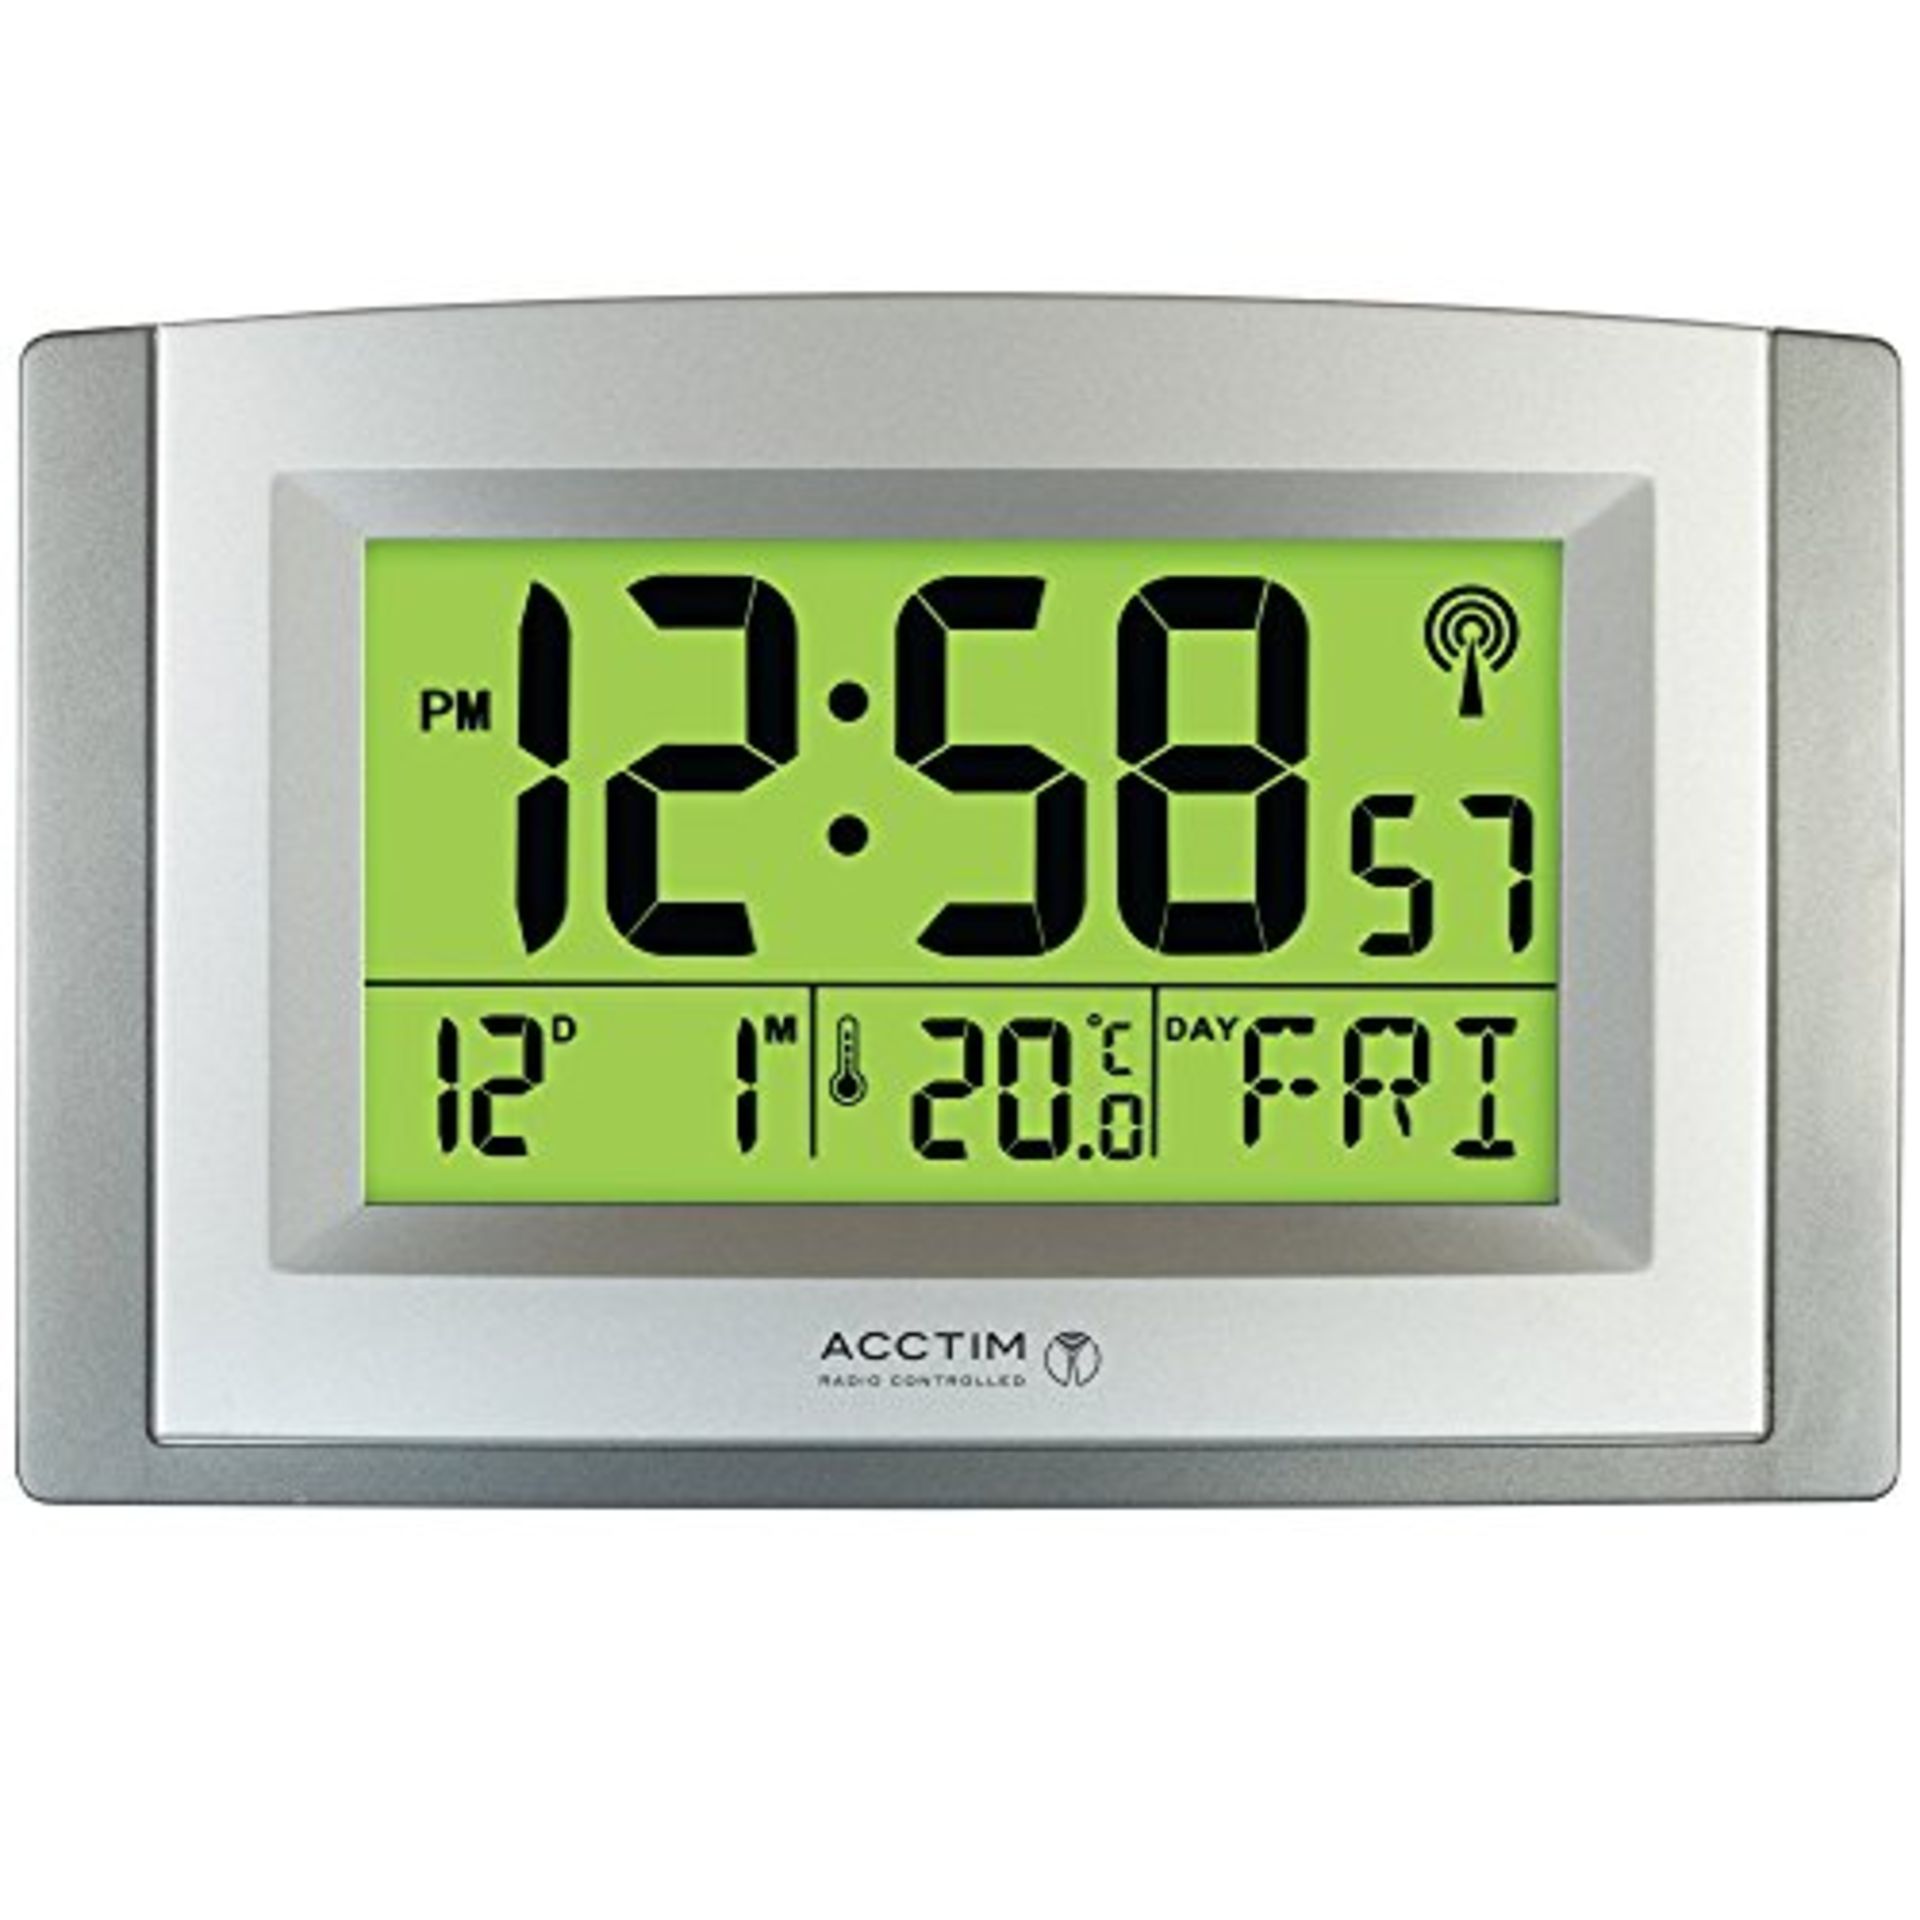 Acctim Stratus Digital Wall/Desk Clock Radio Controlled Tabletop LCD Display Date & Th